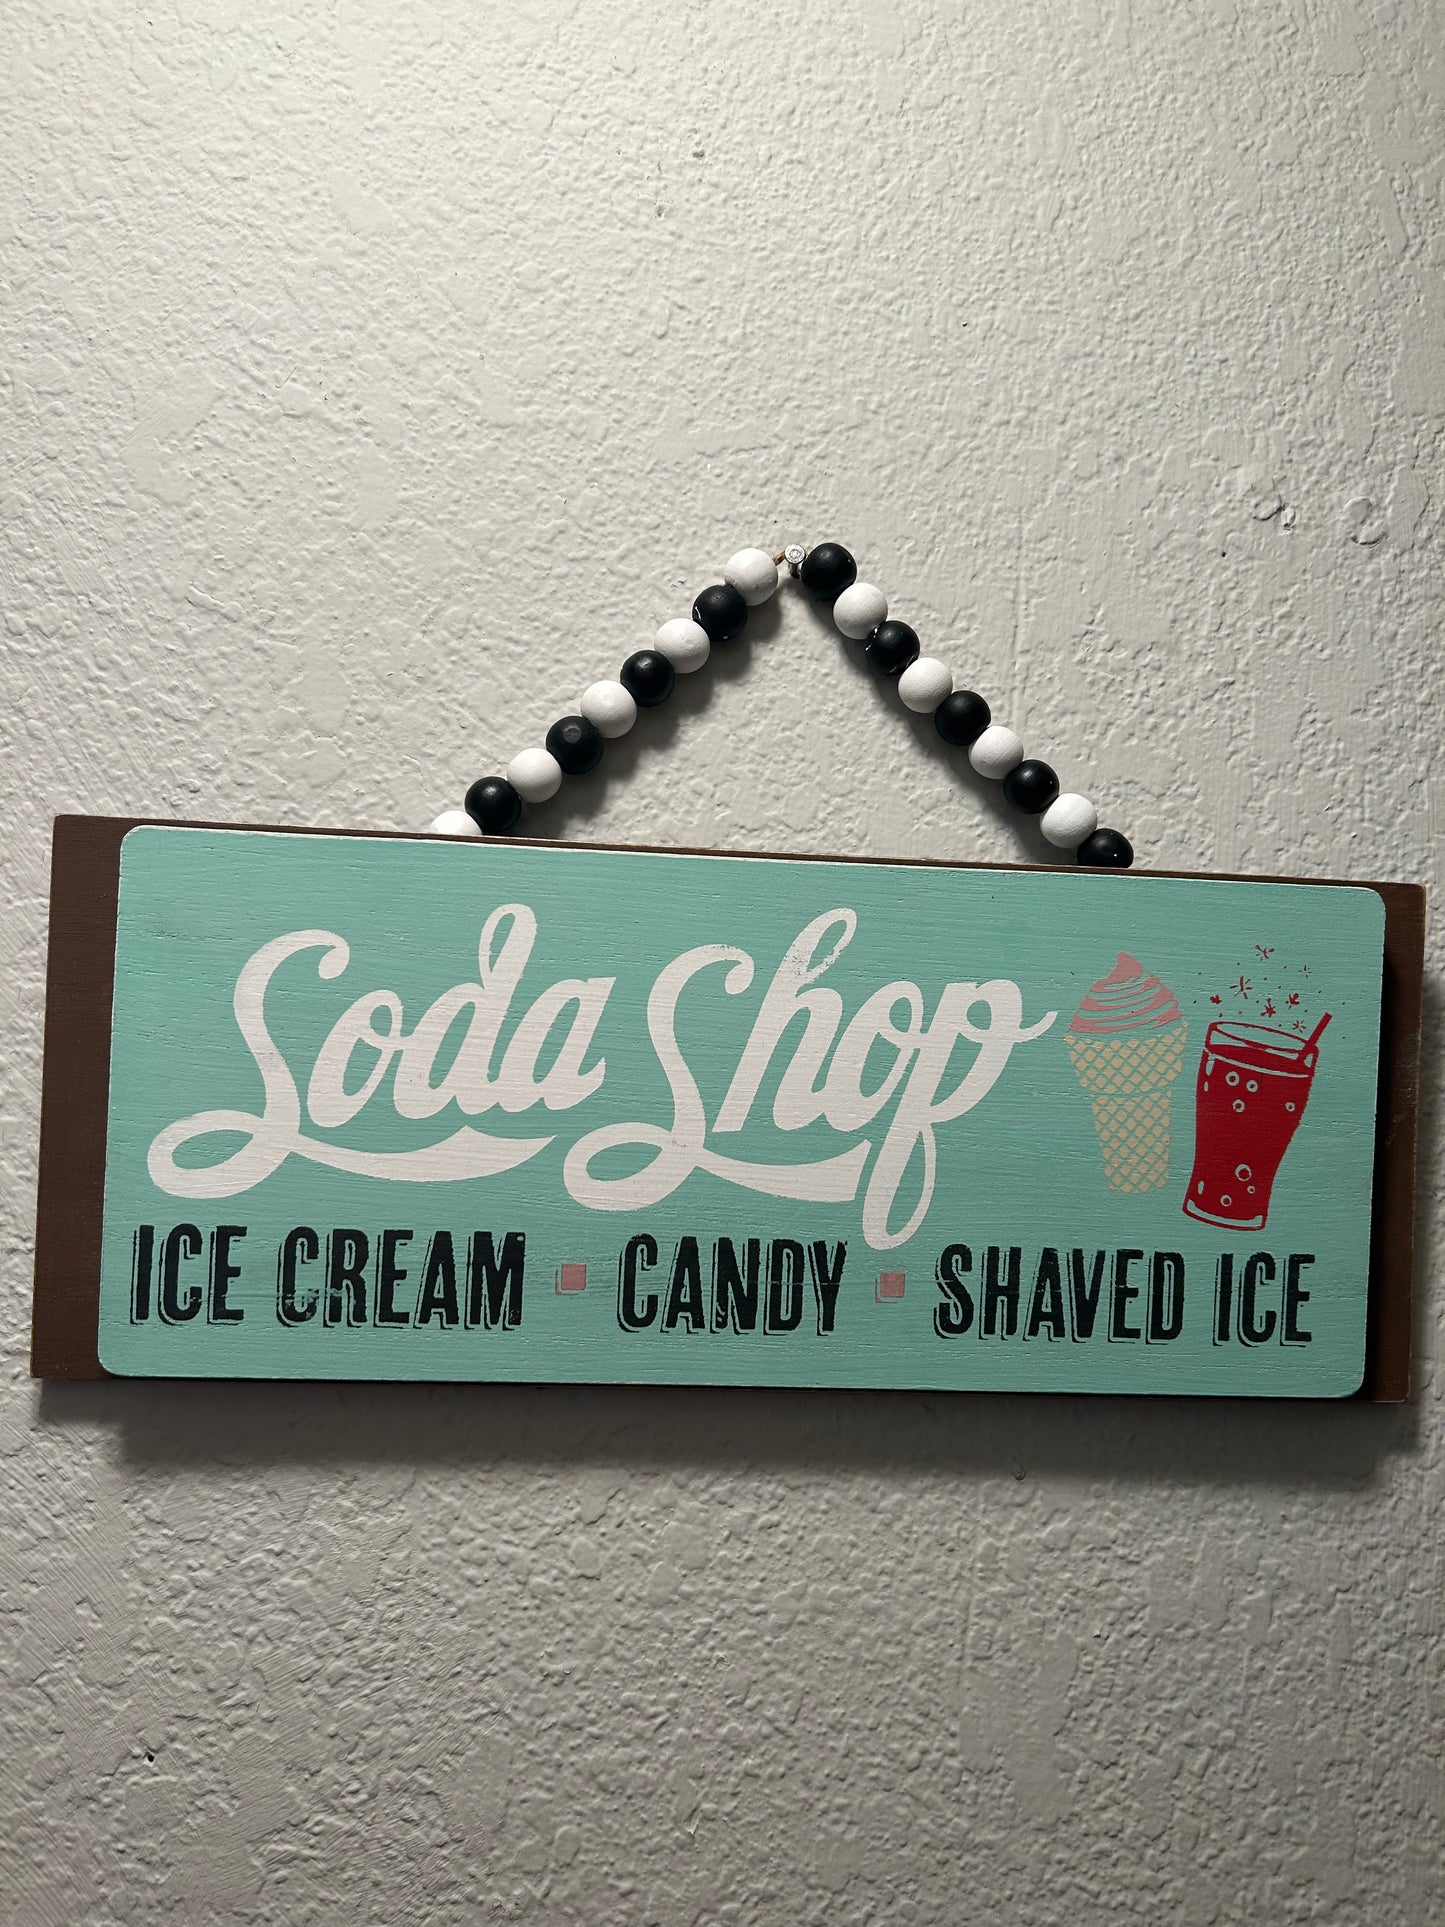 Soda shop sign